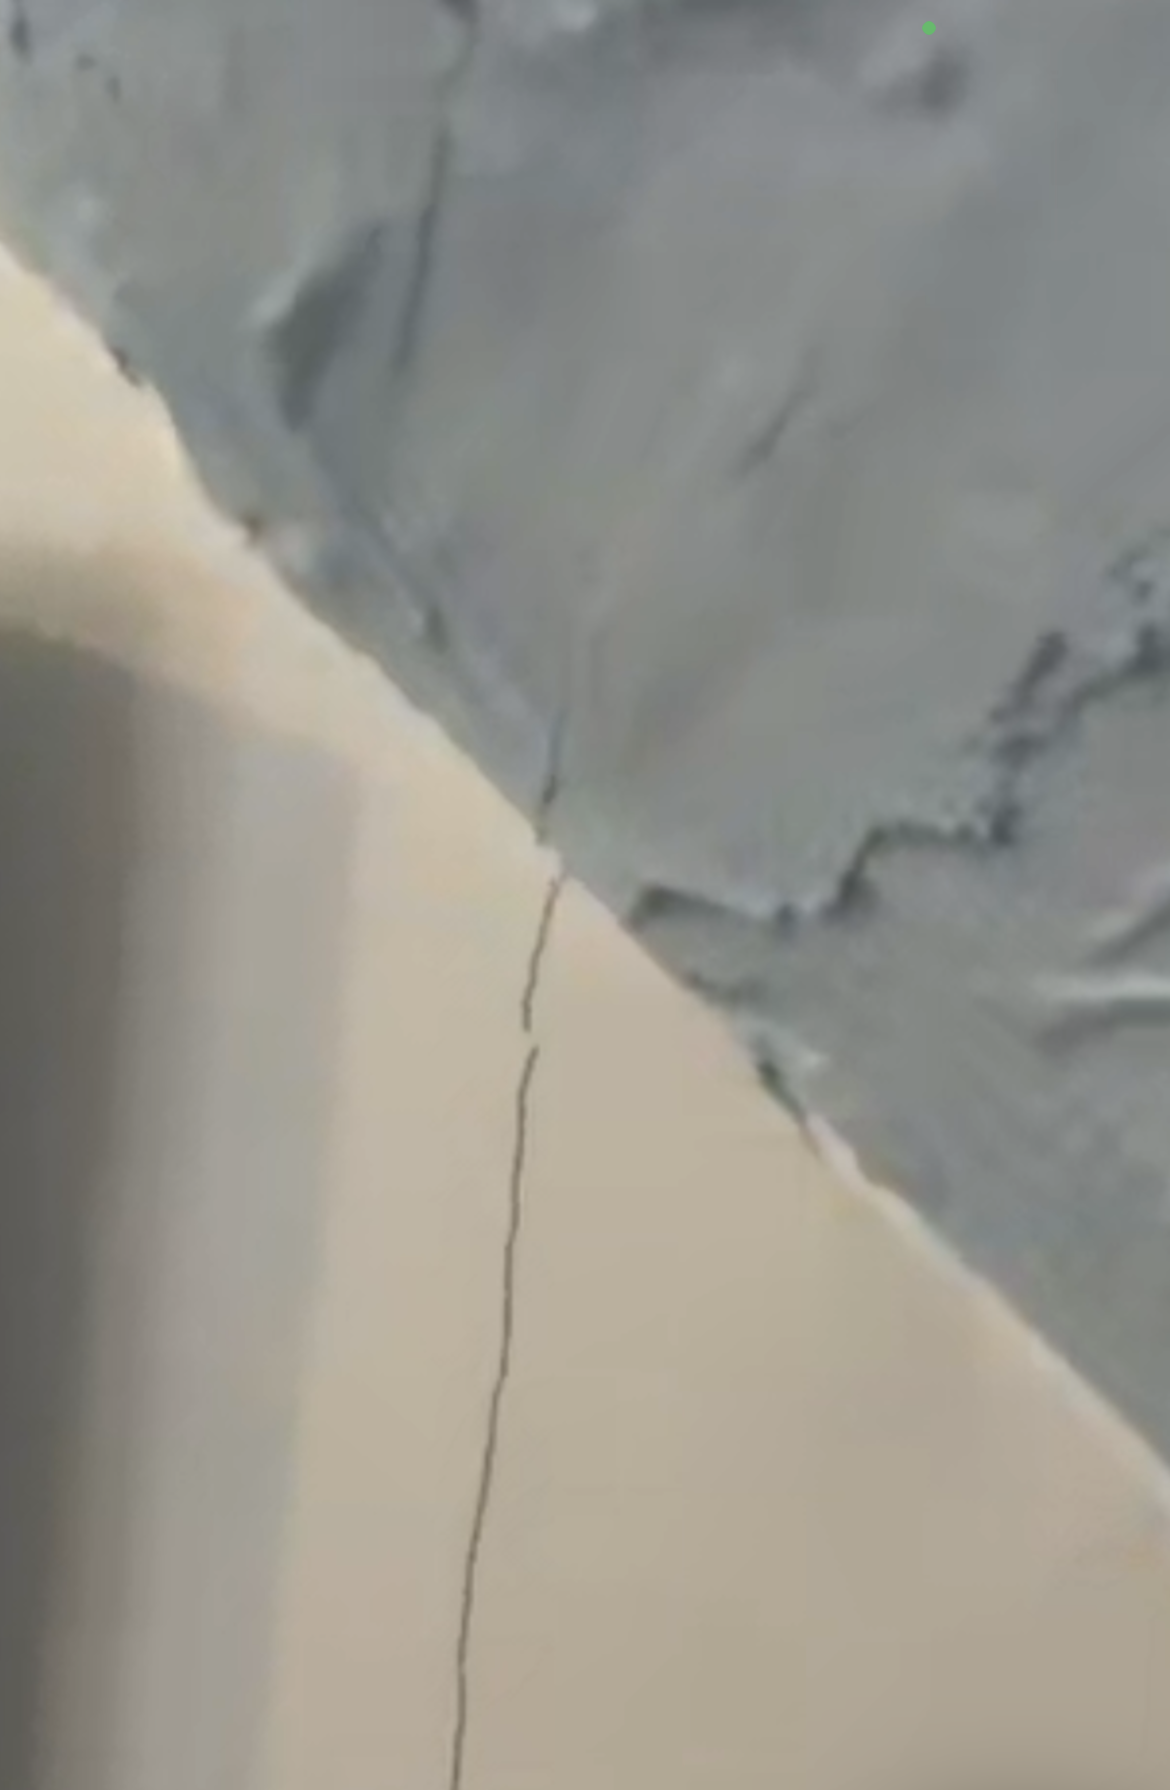 cracks in house wall Derby Derbyshire